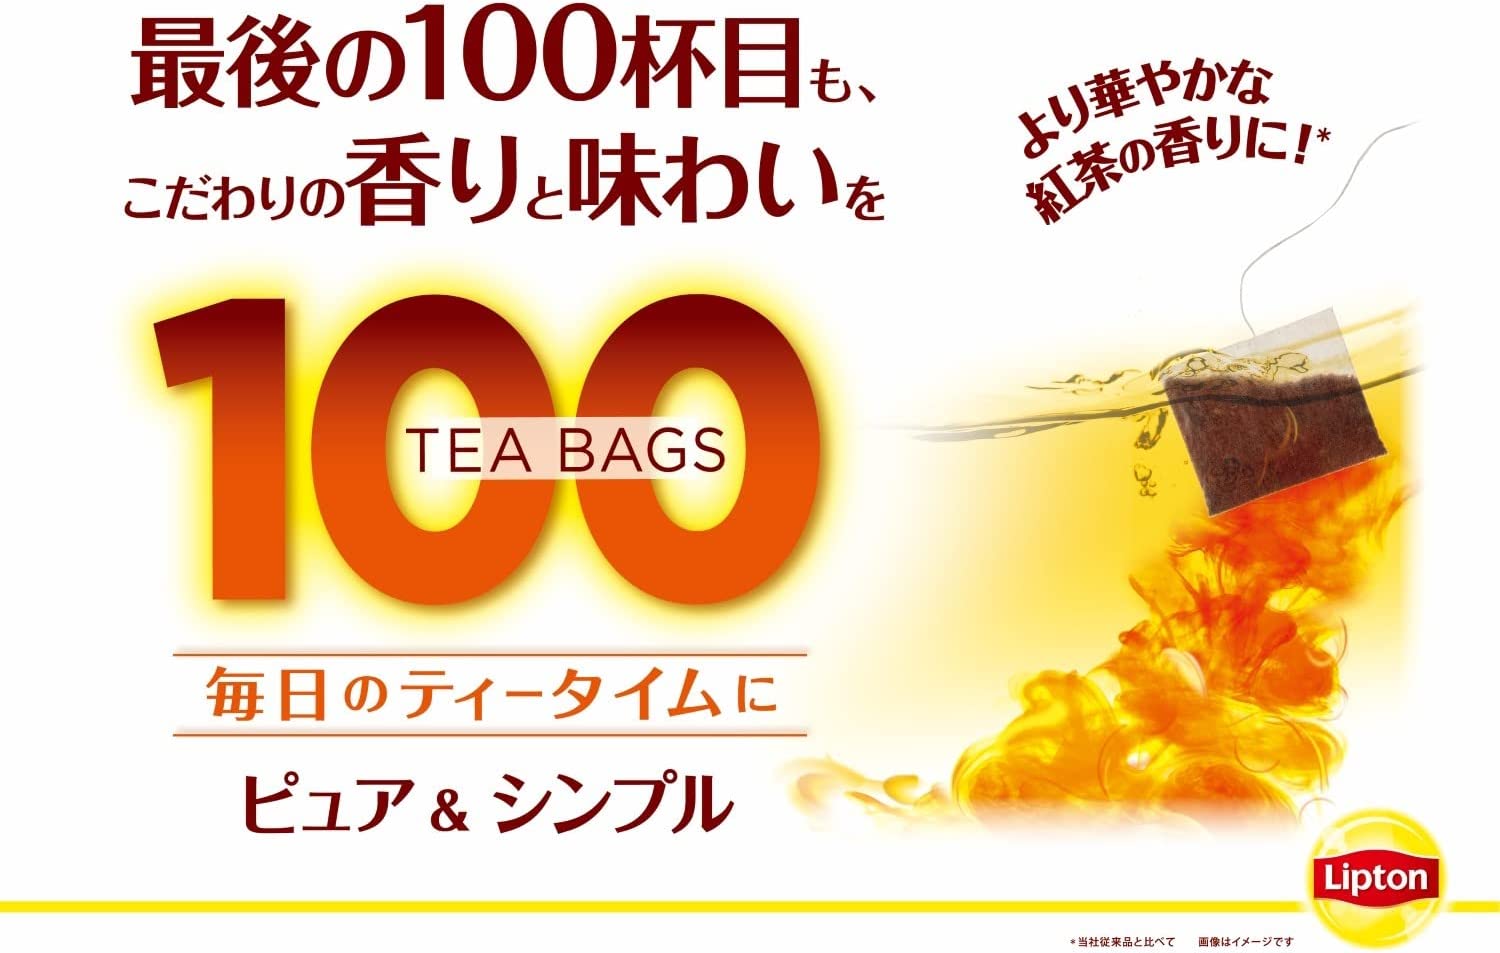 Lipton Pure and Simple Black Tea Bags 100P x 3 - NihonMura